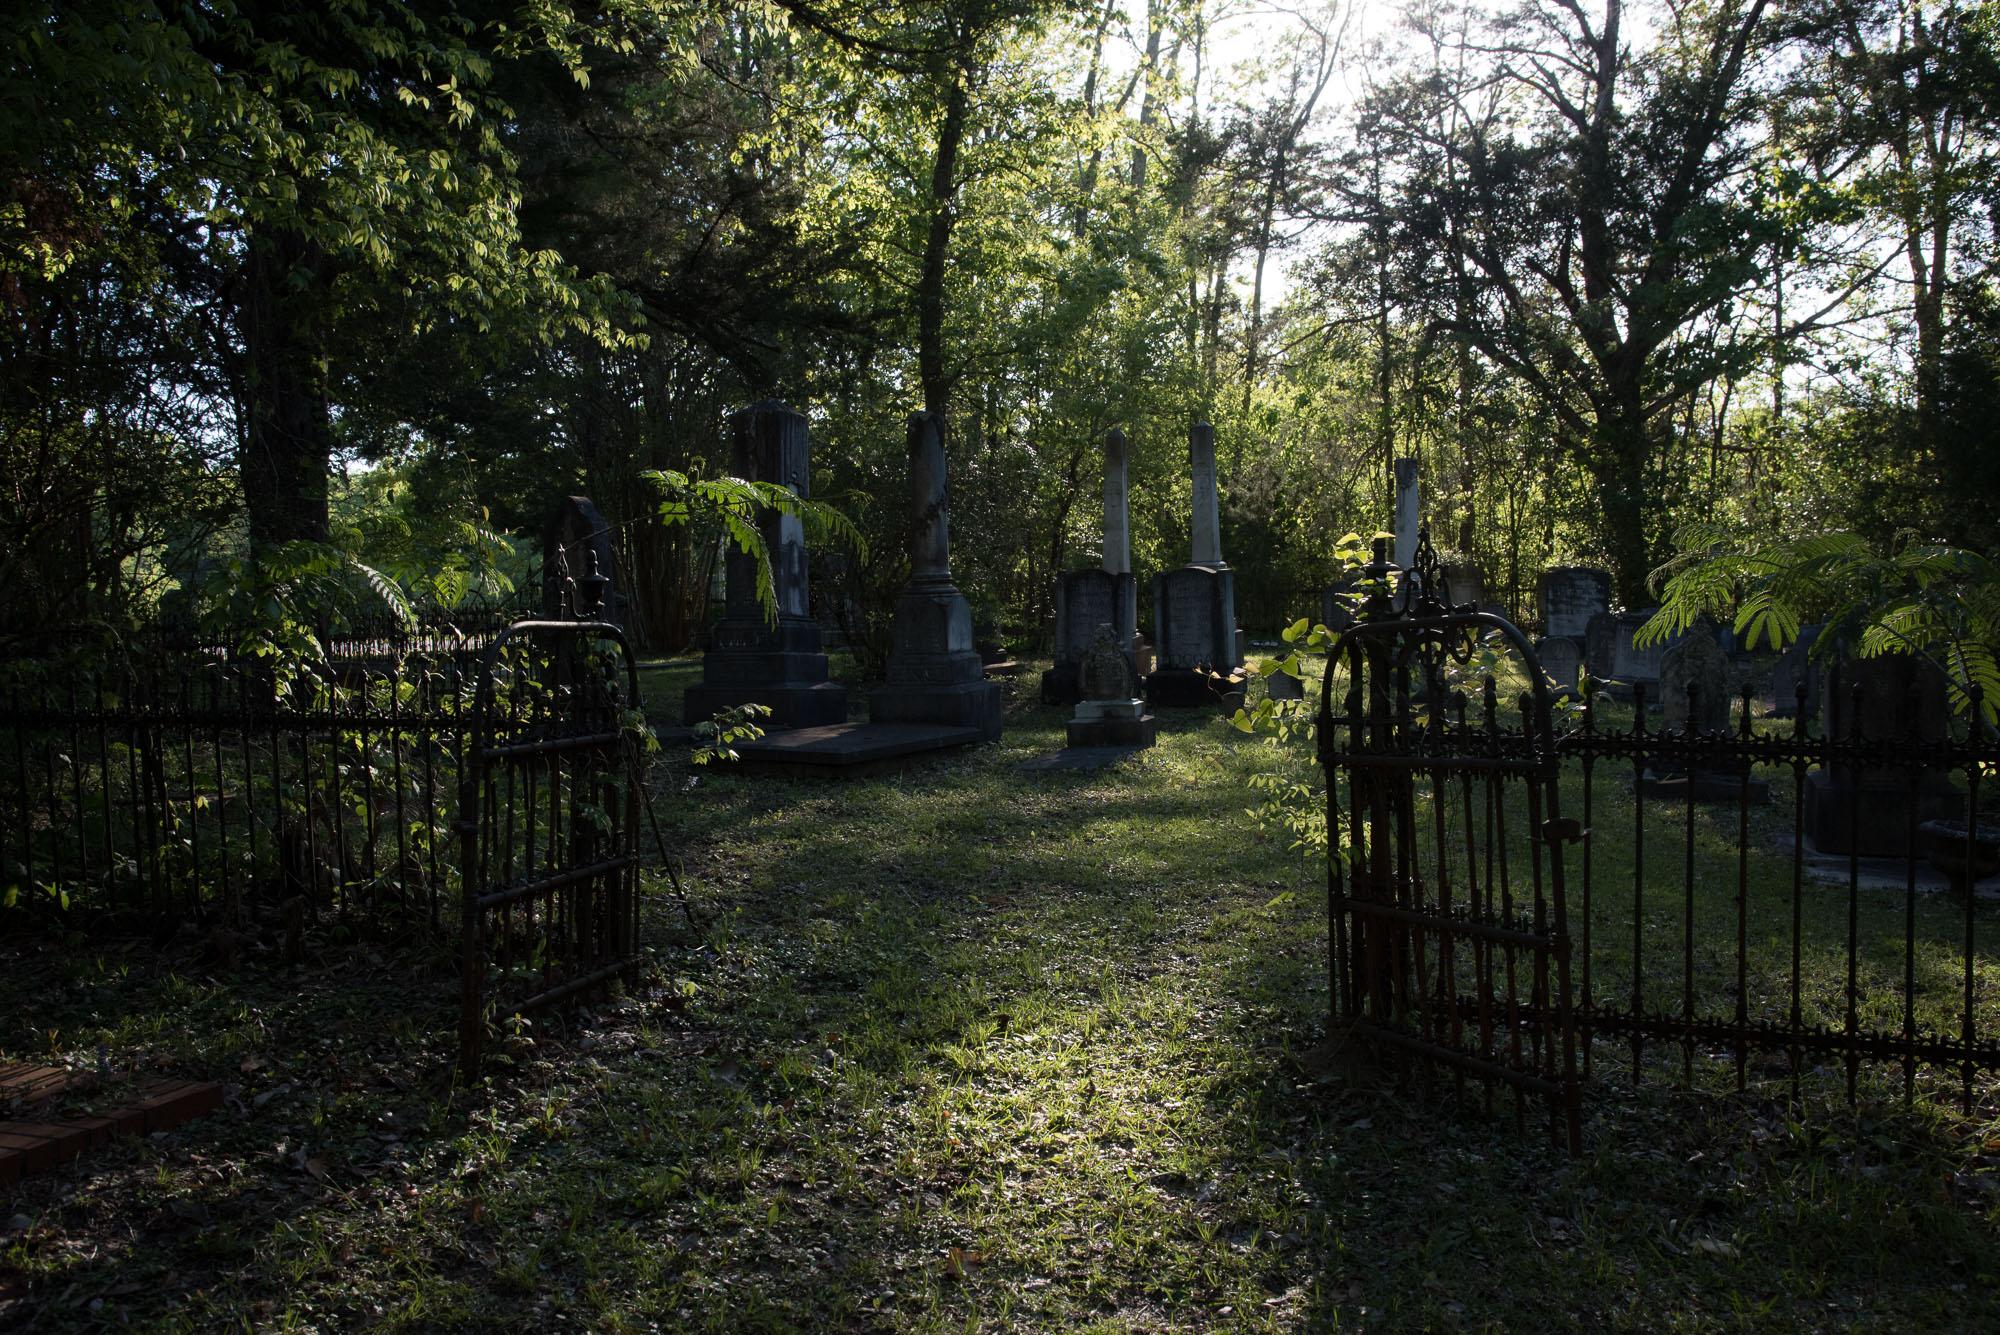  Cemetery near Faunsdale Plantation, Alabama 